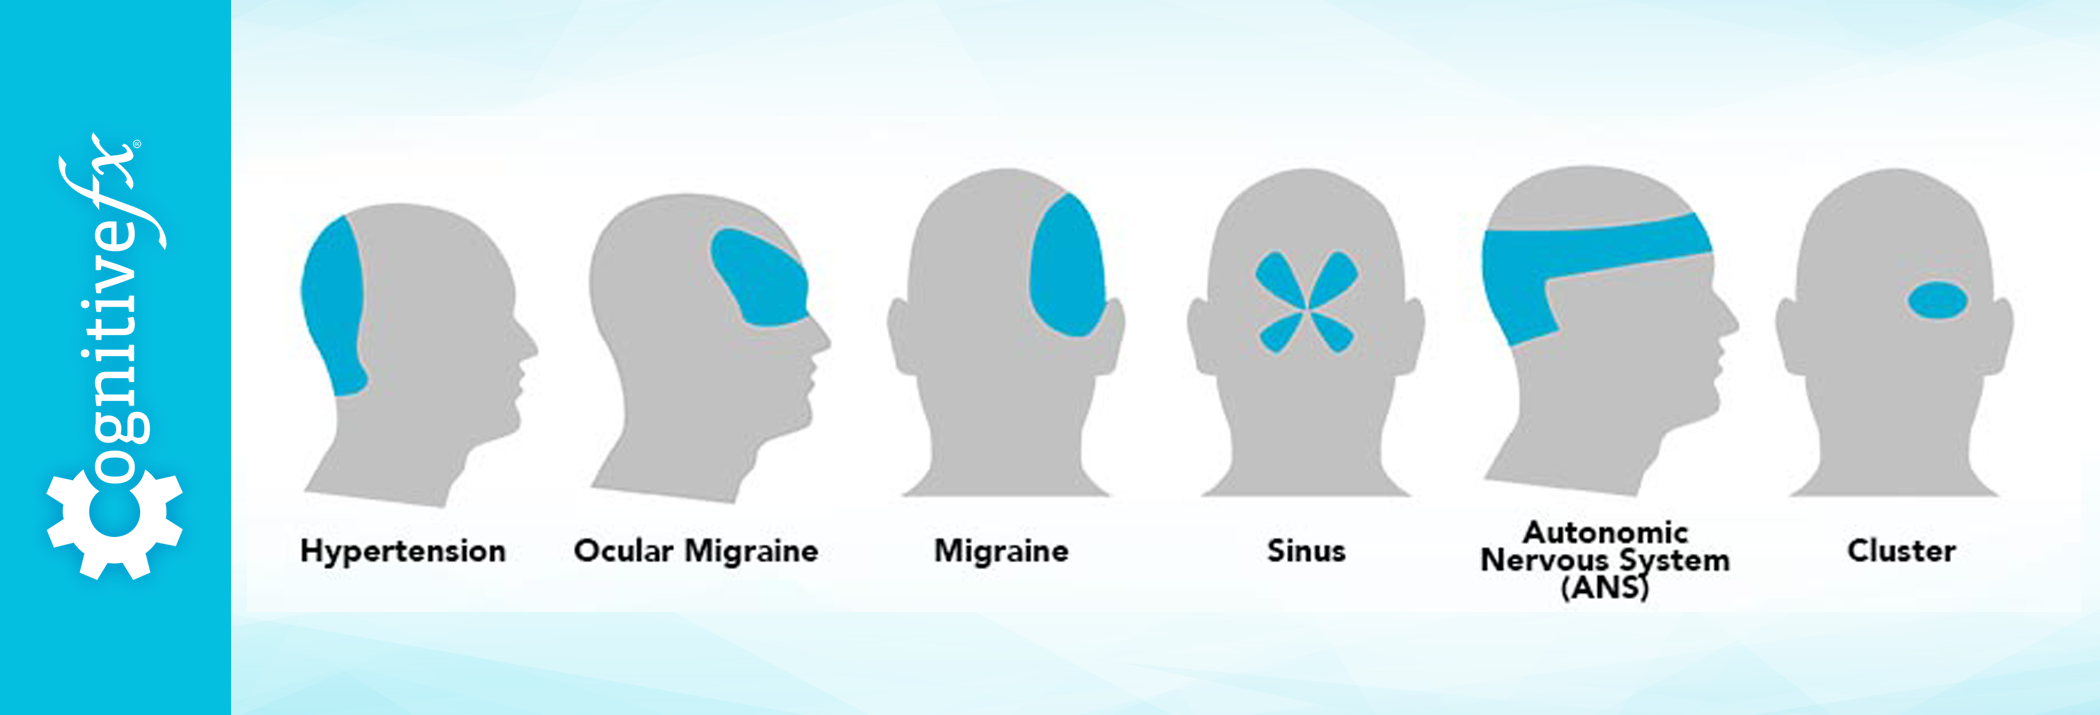 Concussion Headaches or “Post-Traumatic Headaches” | Cognitive FX